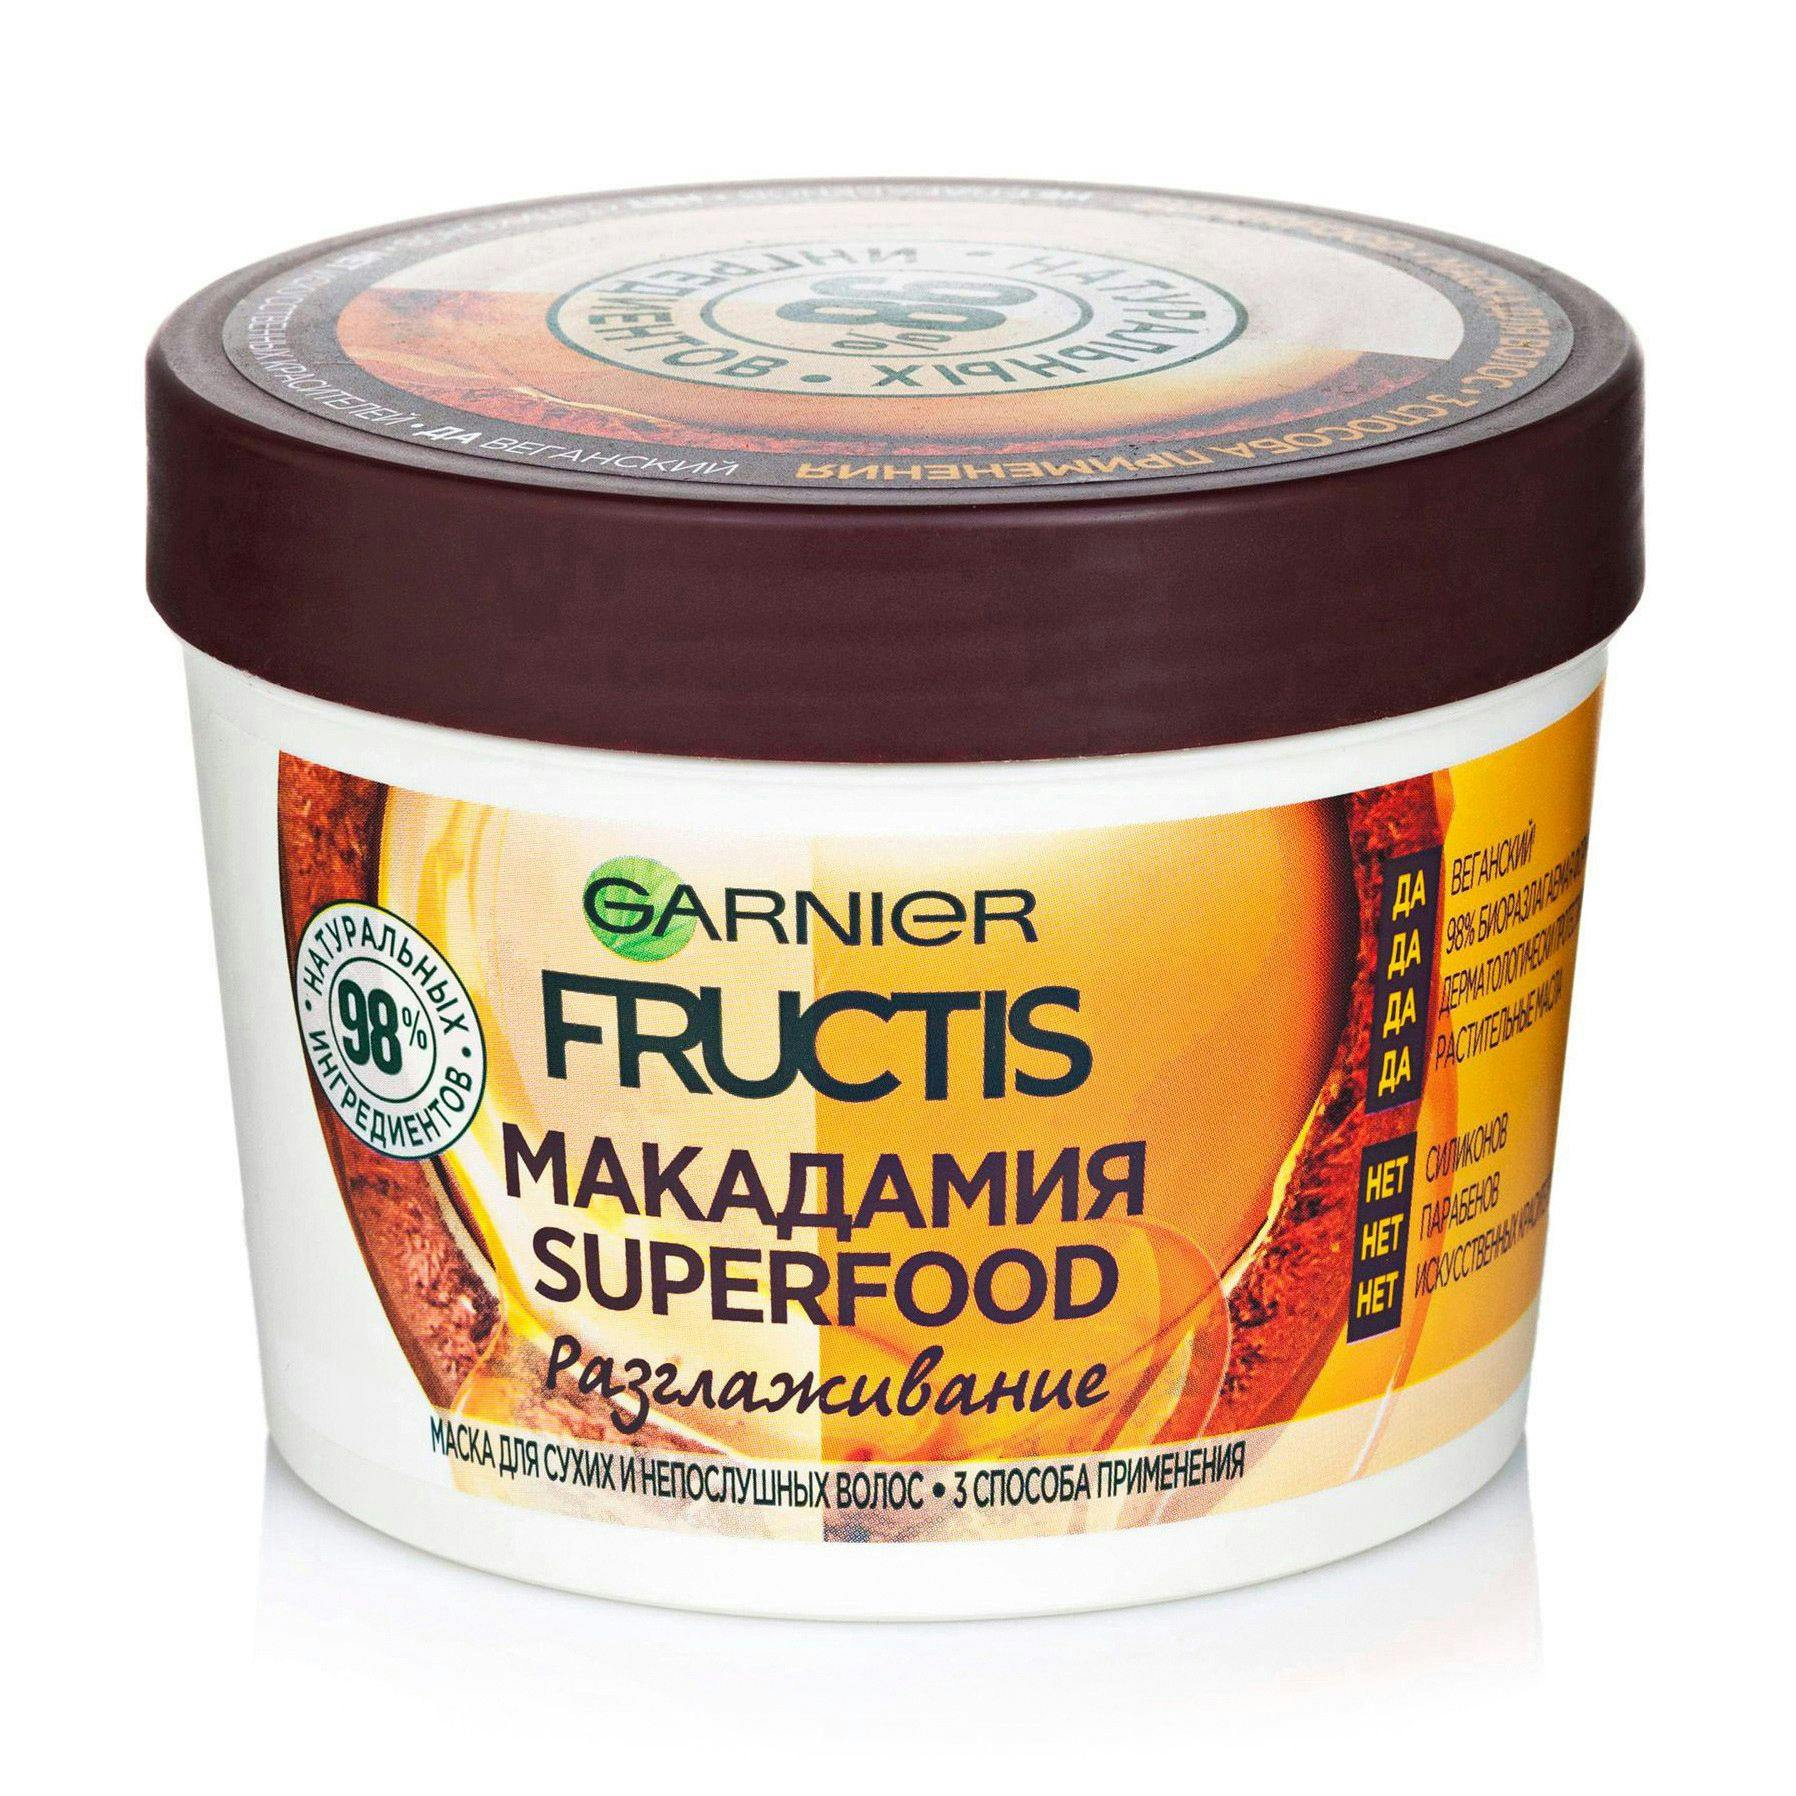 Garnier Fructis Superfood Mask Маска 3 в 1 "Макадамия", розгладження для сухого і неслухняного волосся